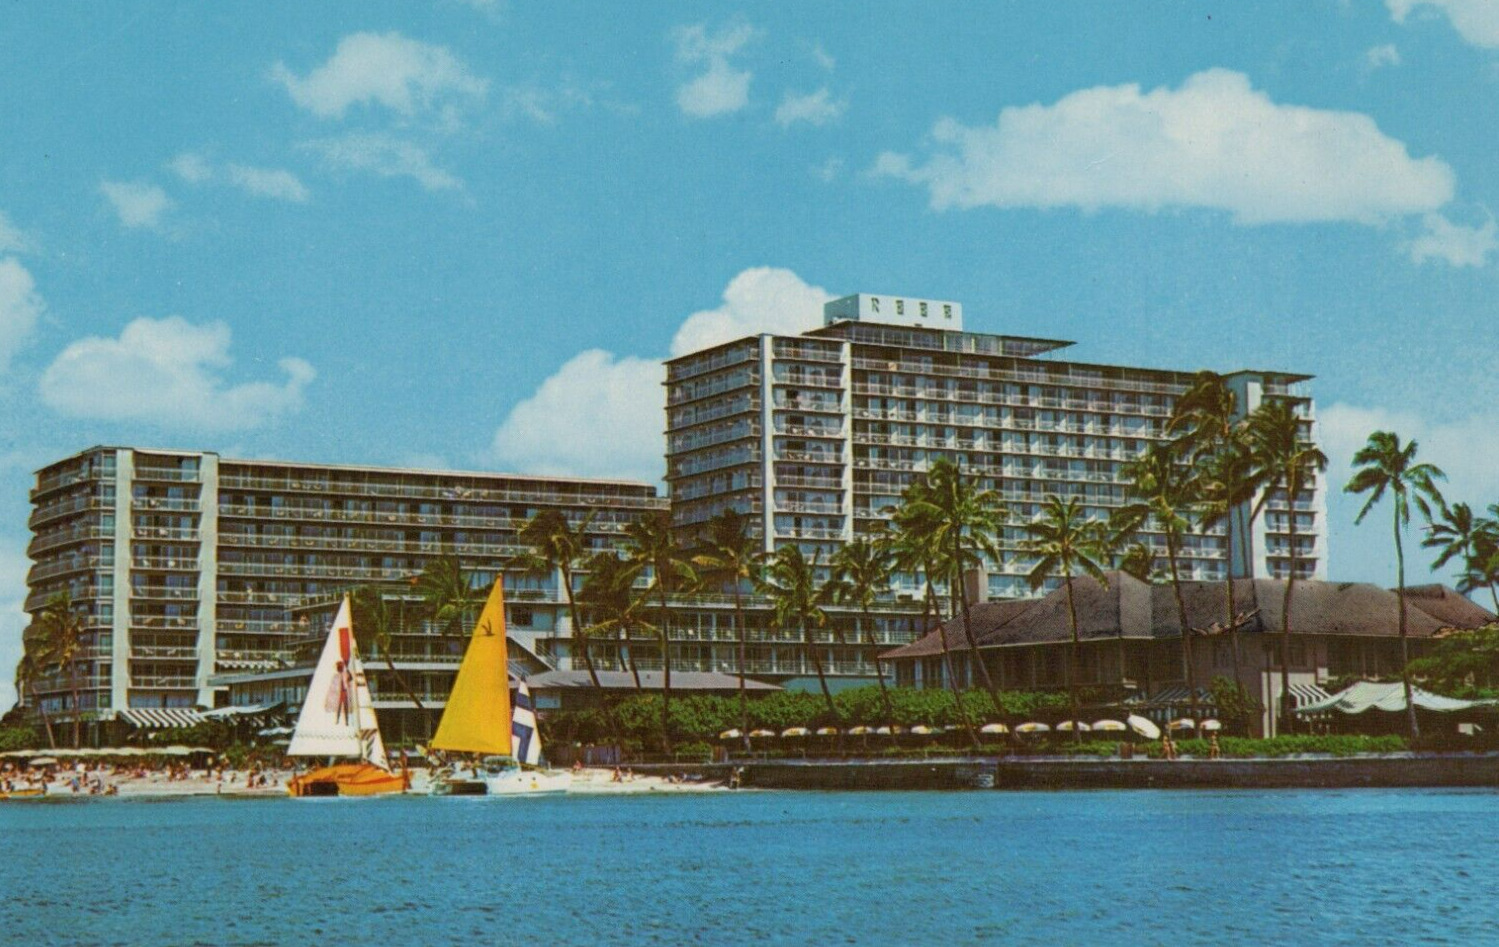 Reef Hotel On Waikiki Beach Oahu Honolulu Hawaii Chrome Vintage Post Card